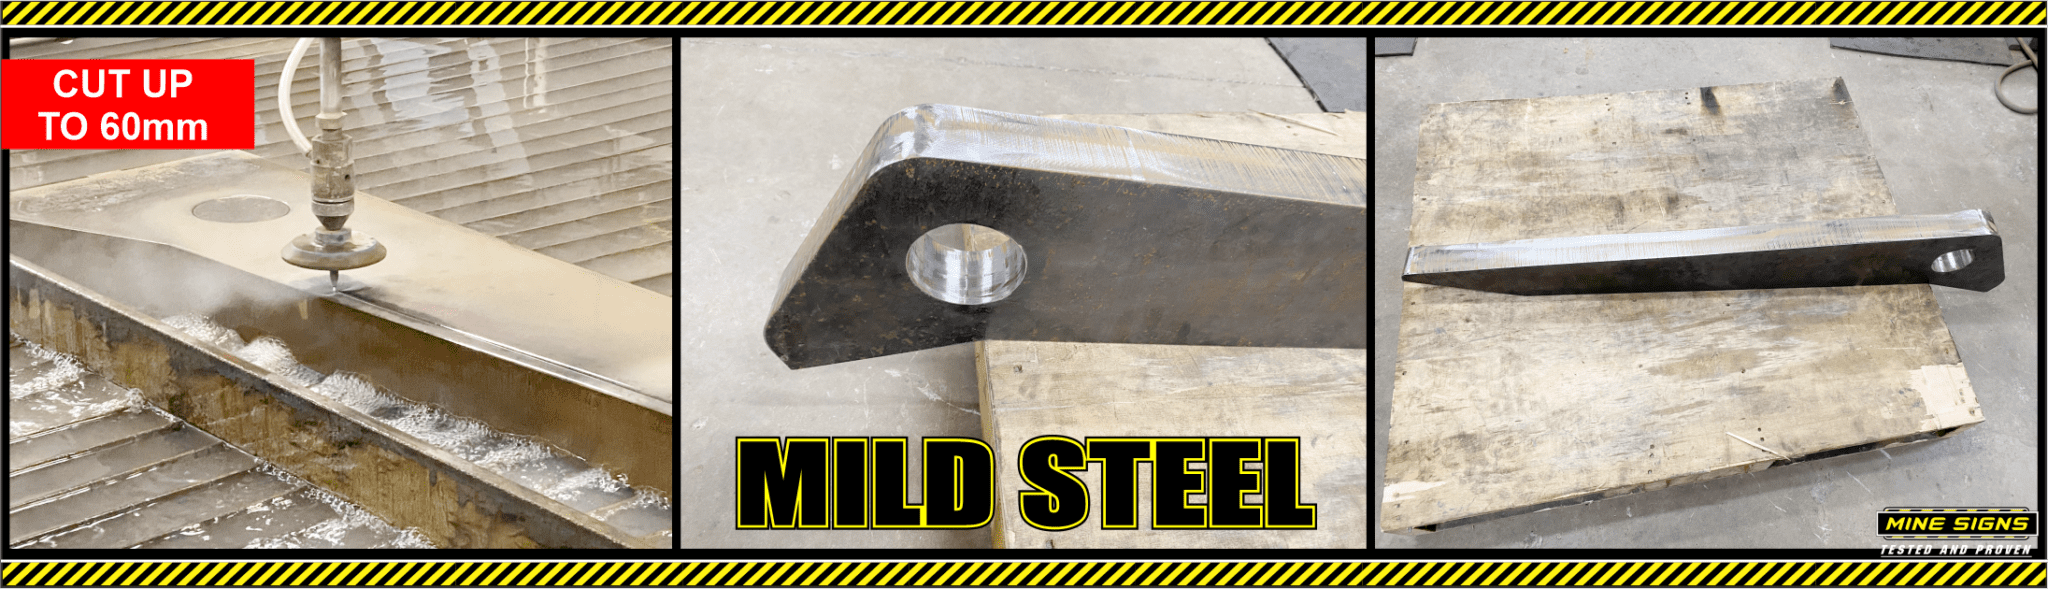 MS Banner - Homepage Mild Steel